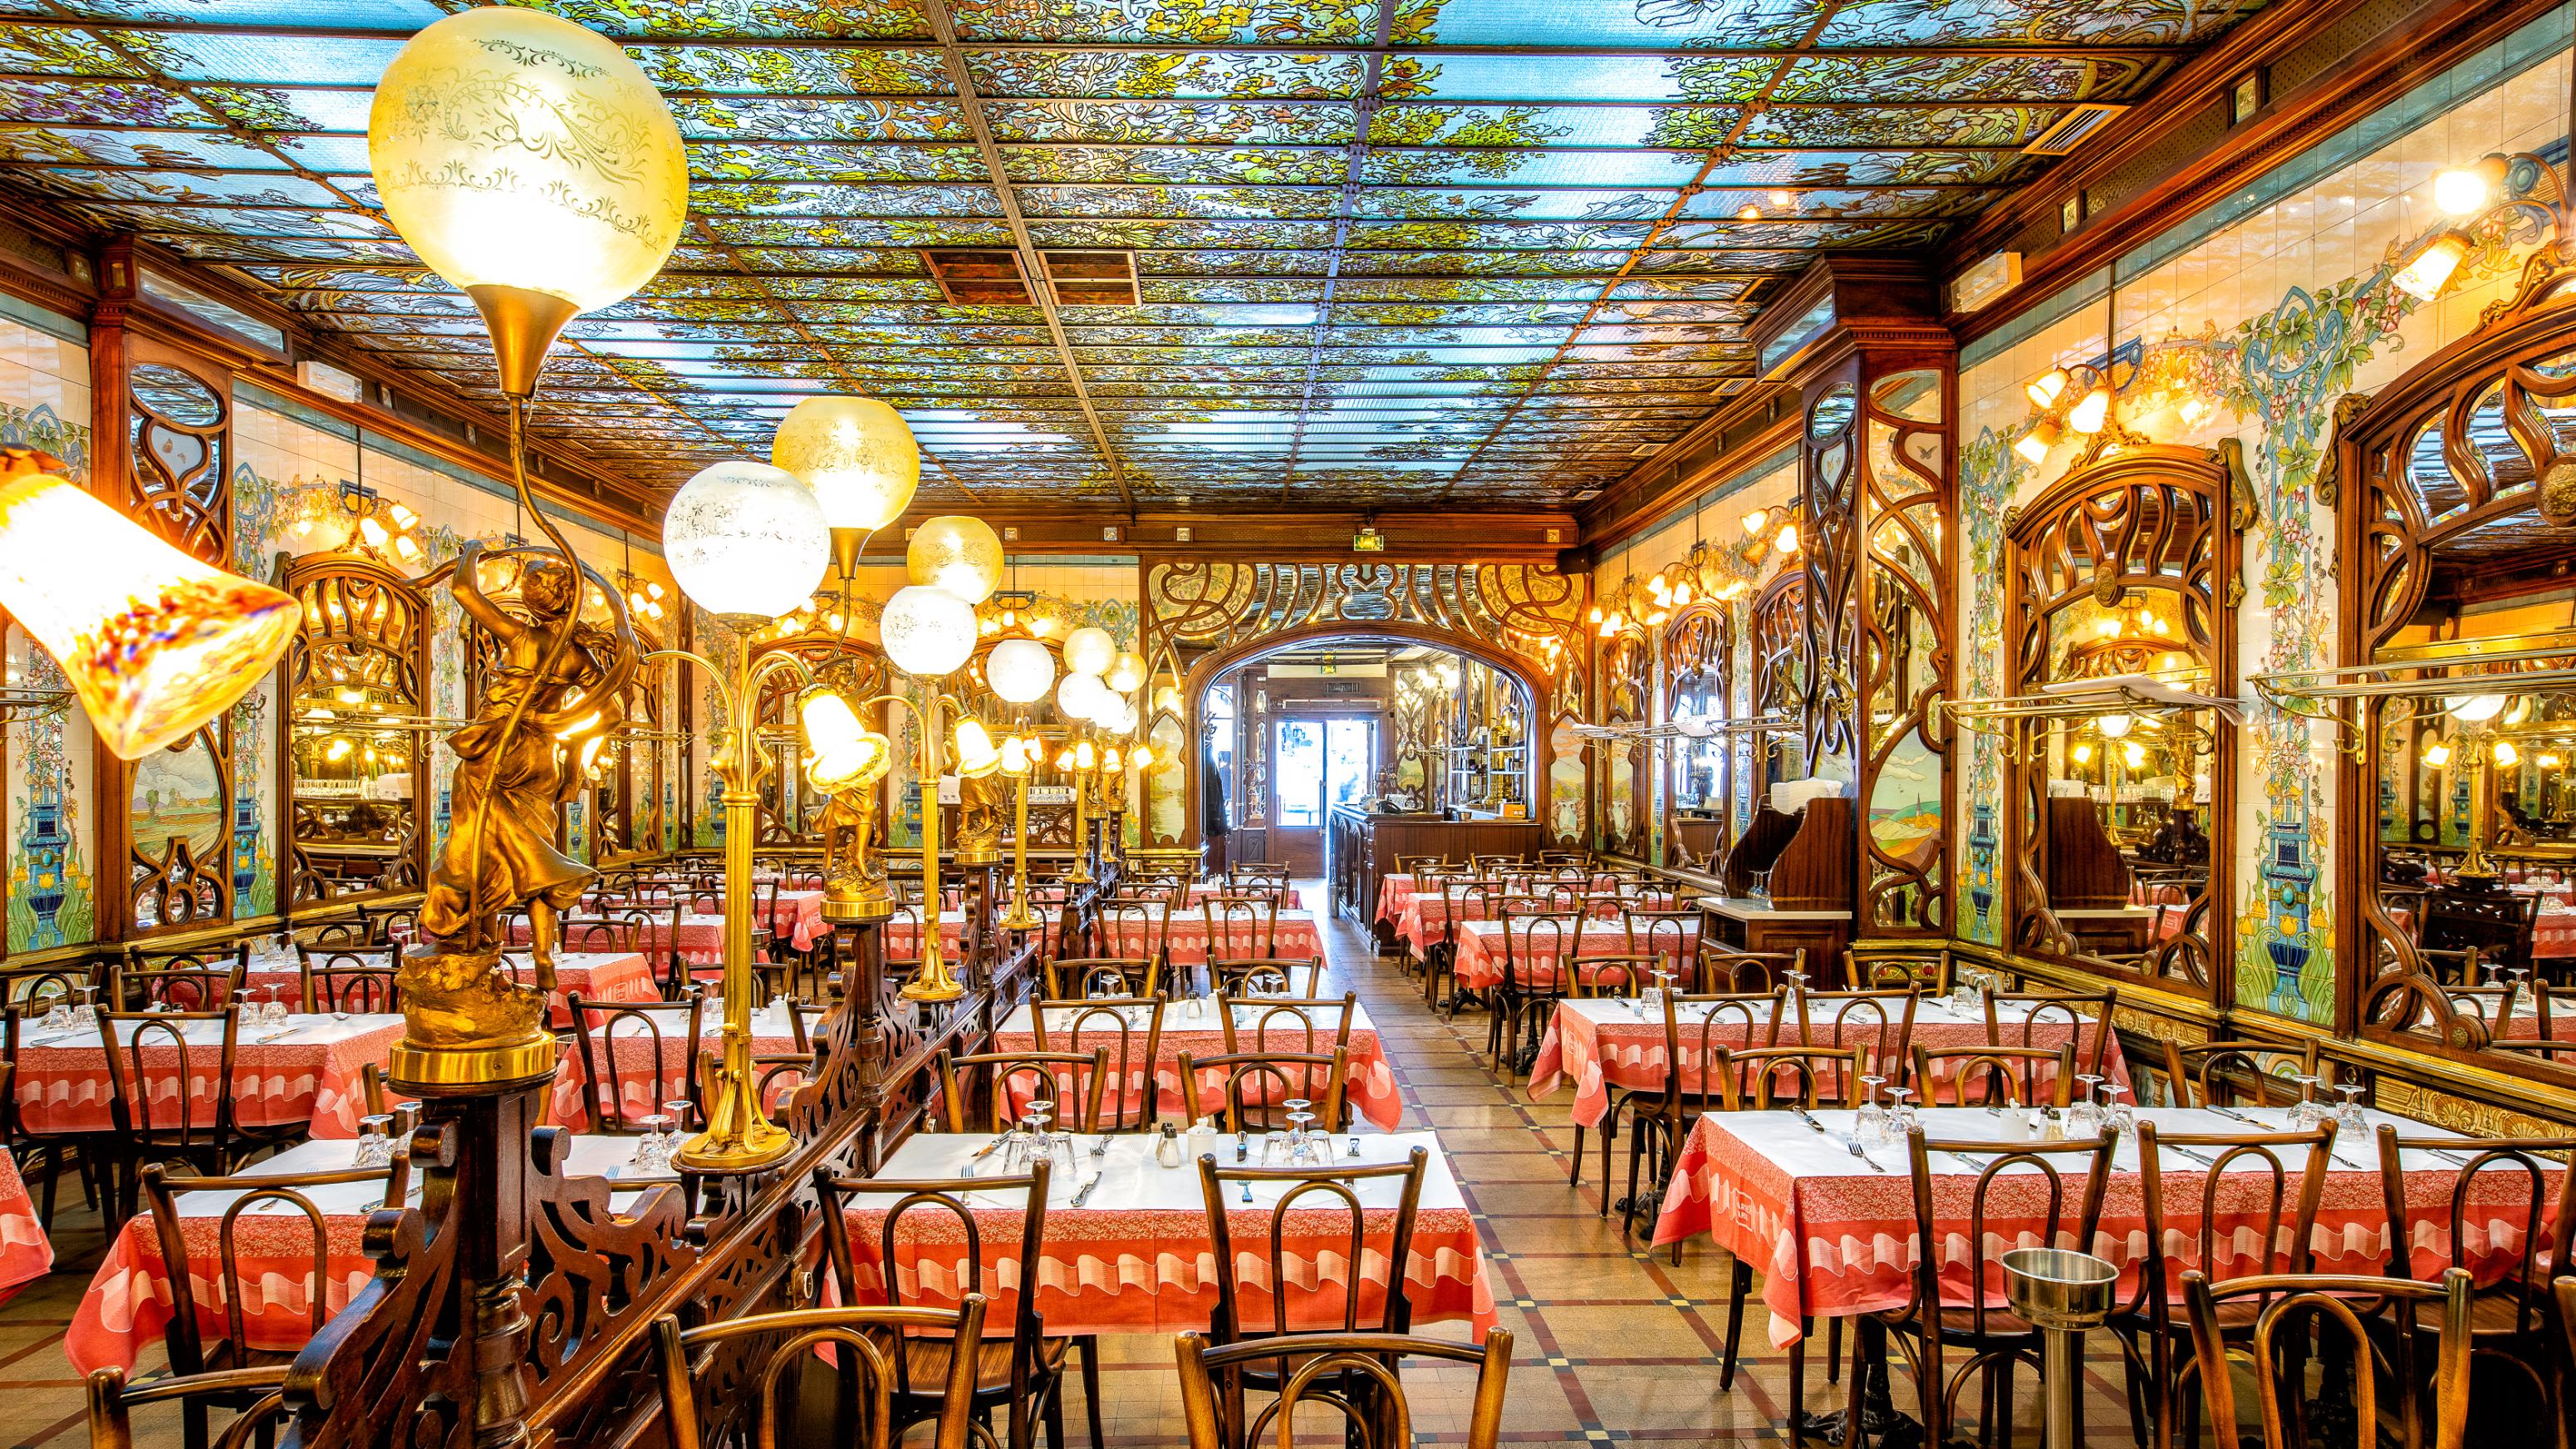 Le Central in Paris - Restaurant Reviews, Menu and Prices